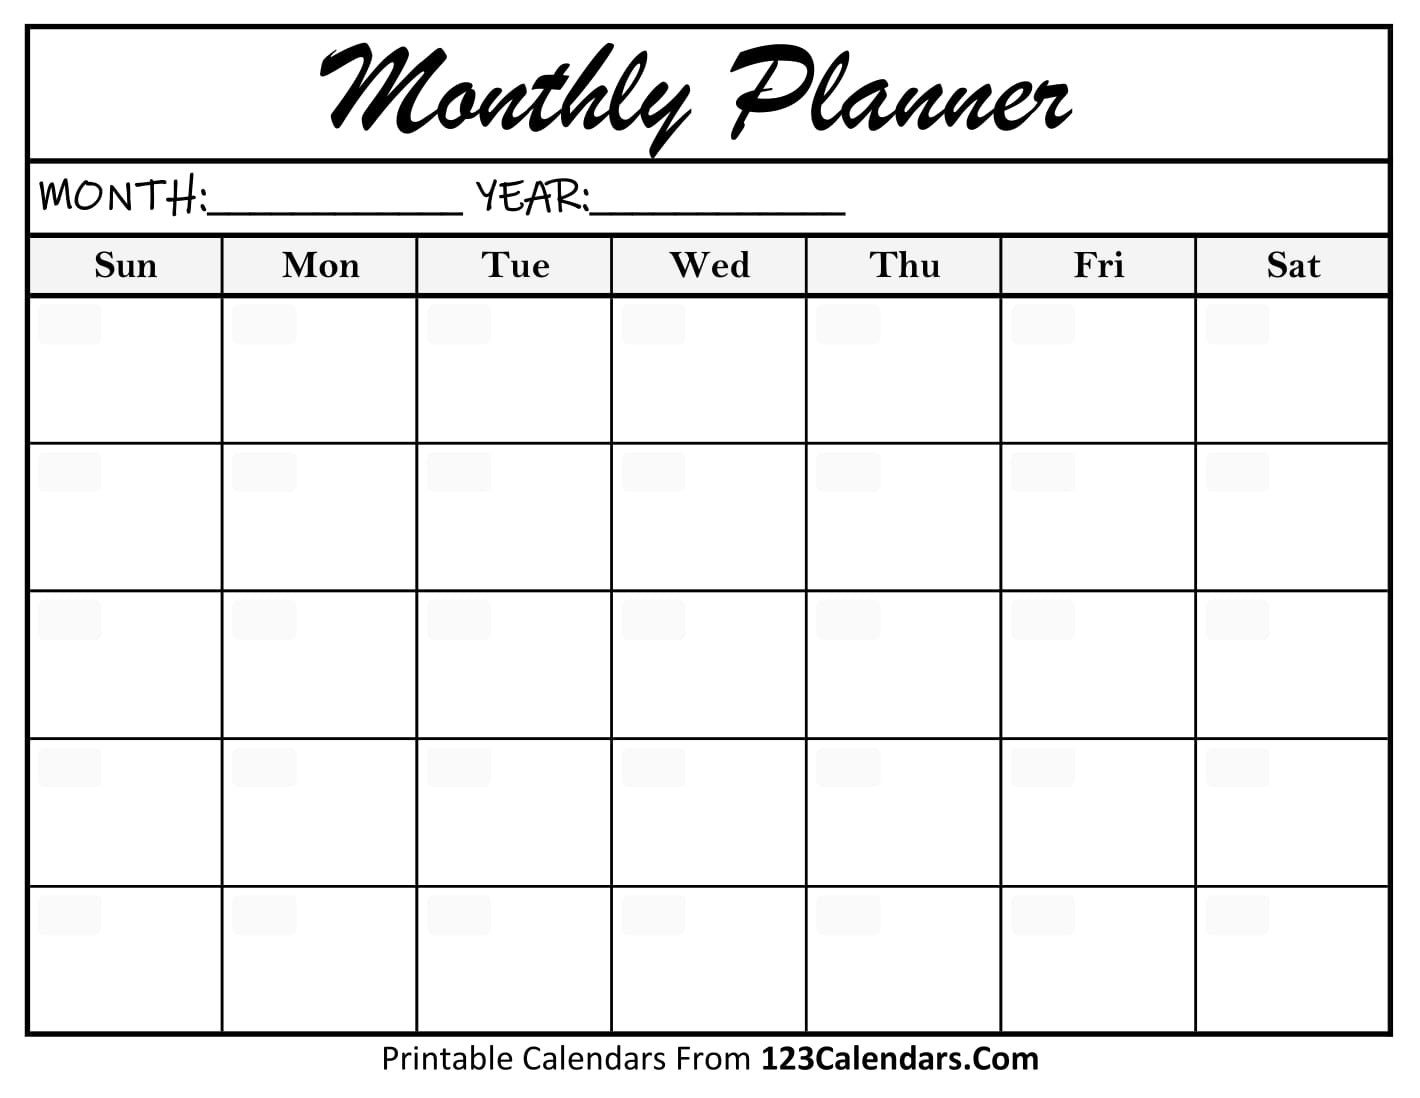 Monthly Planning Calendar Printable